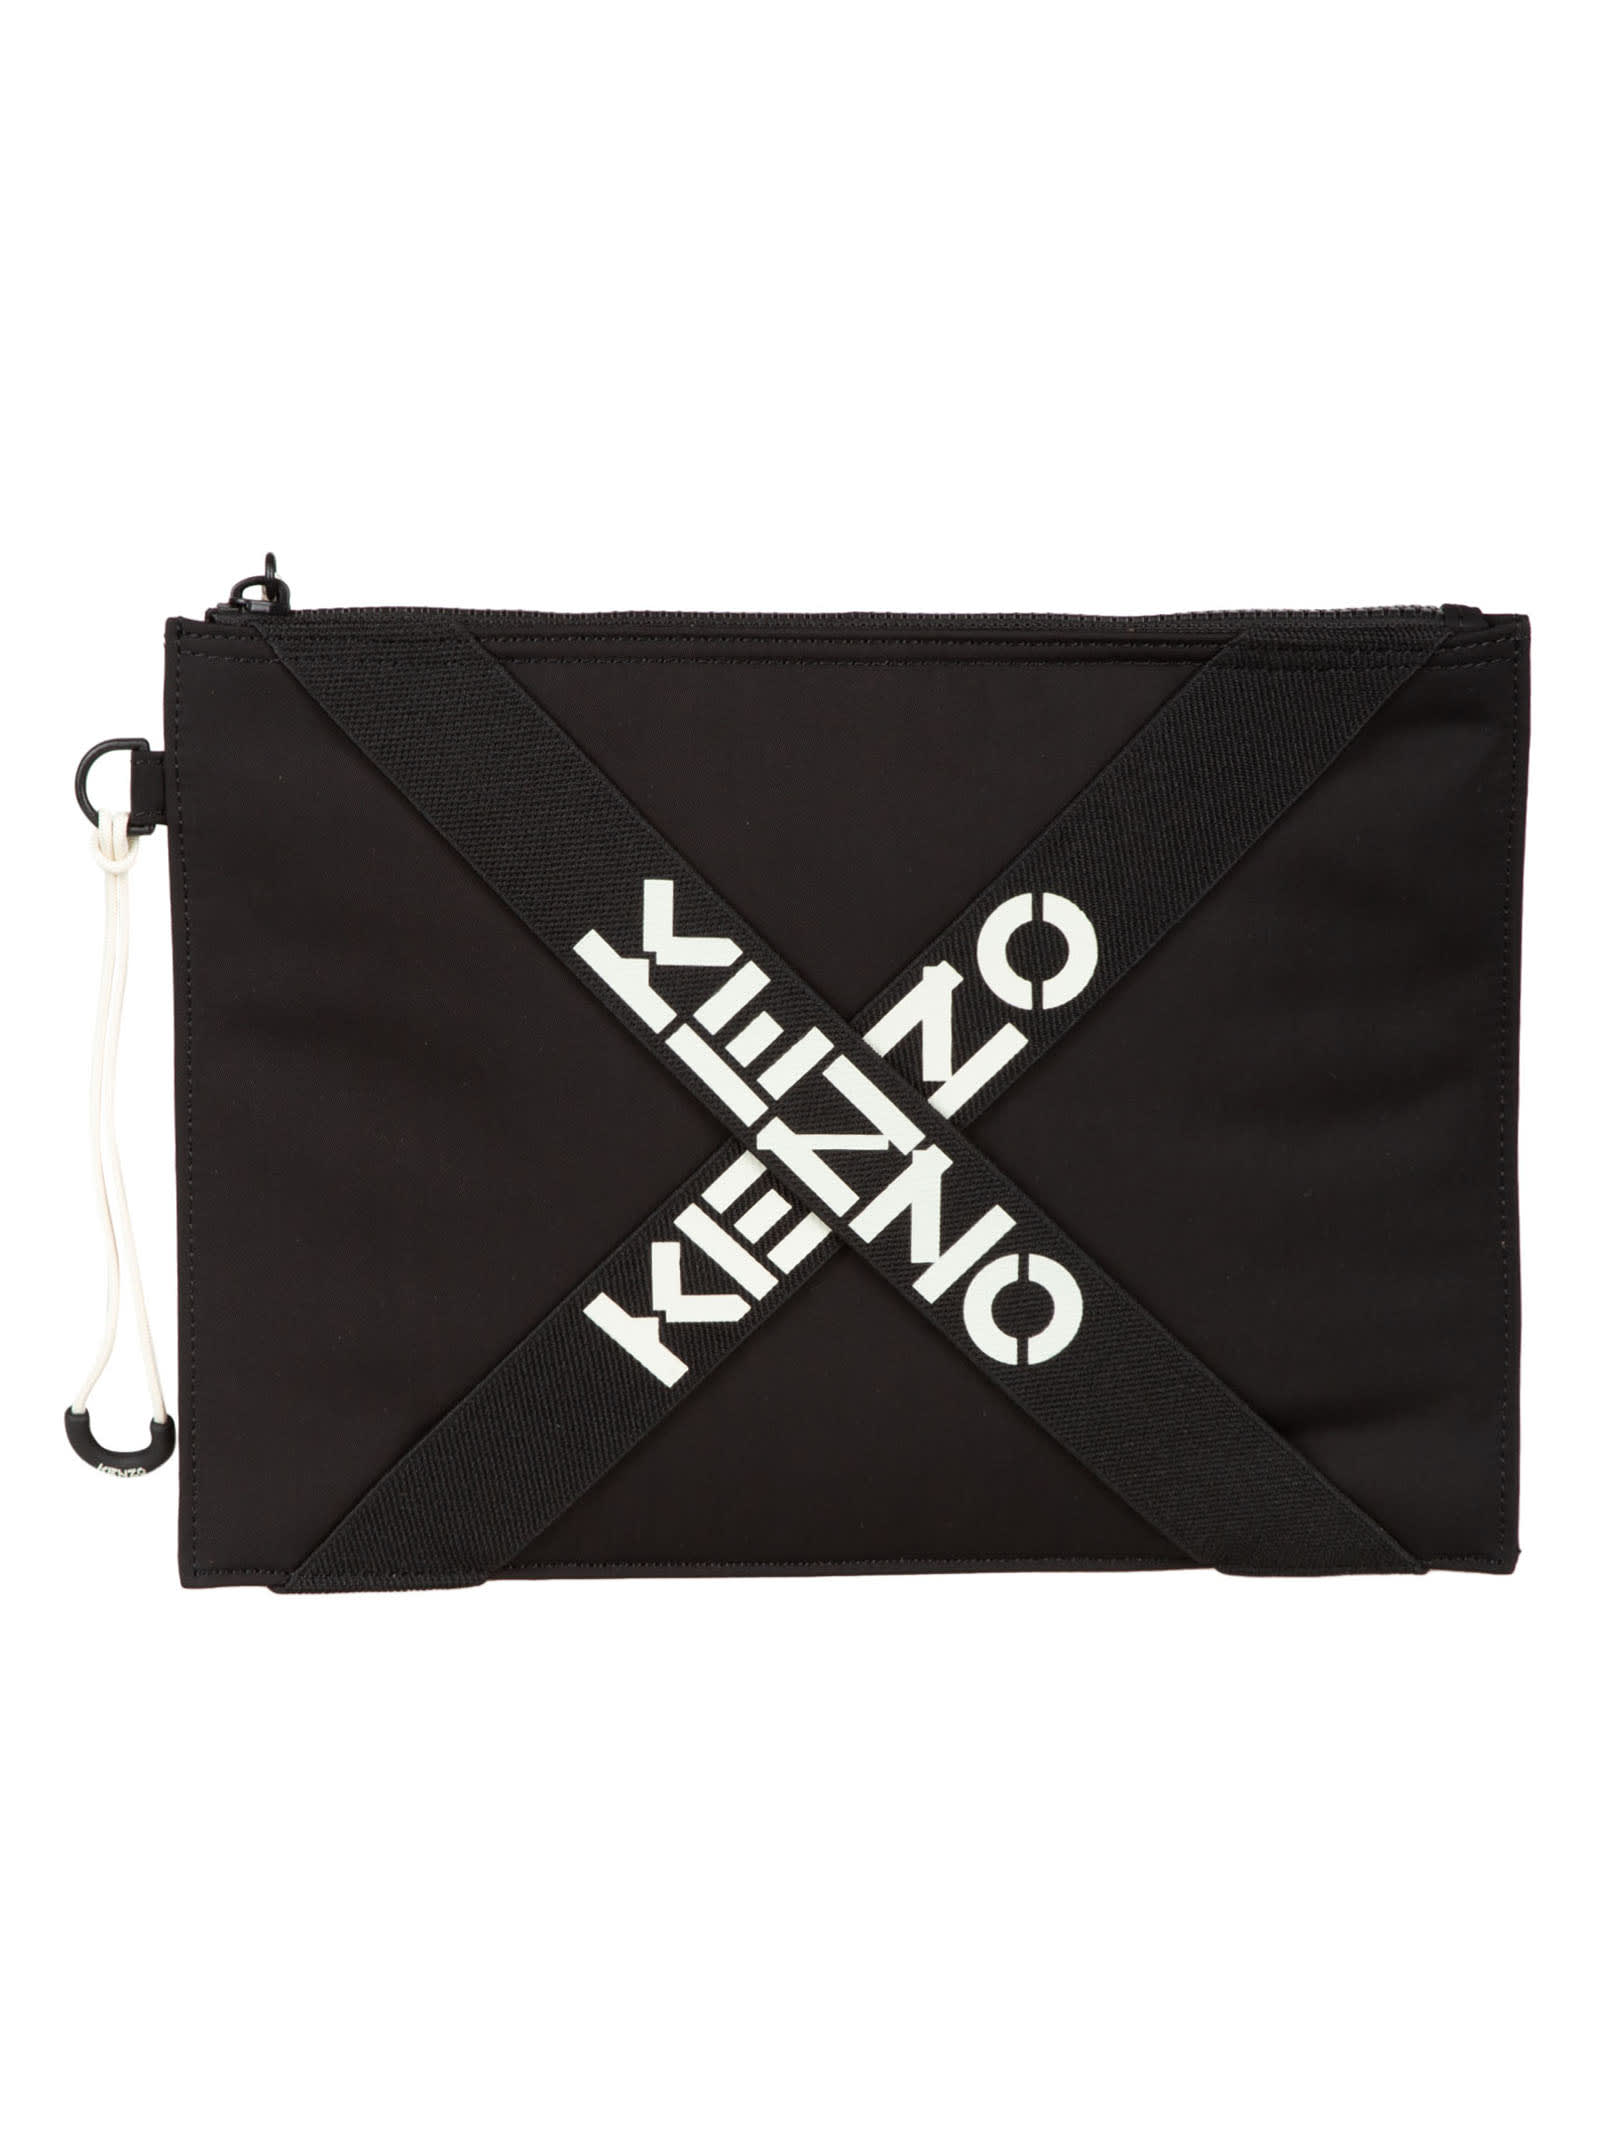 Kenzo Logo Large Clutch